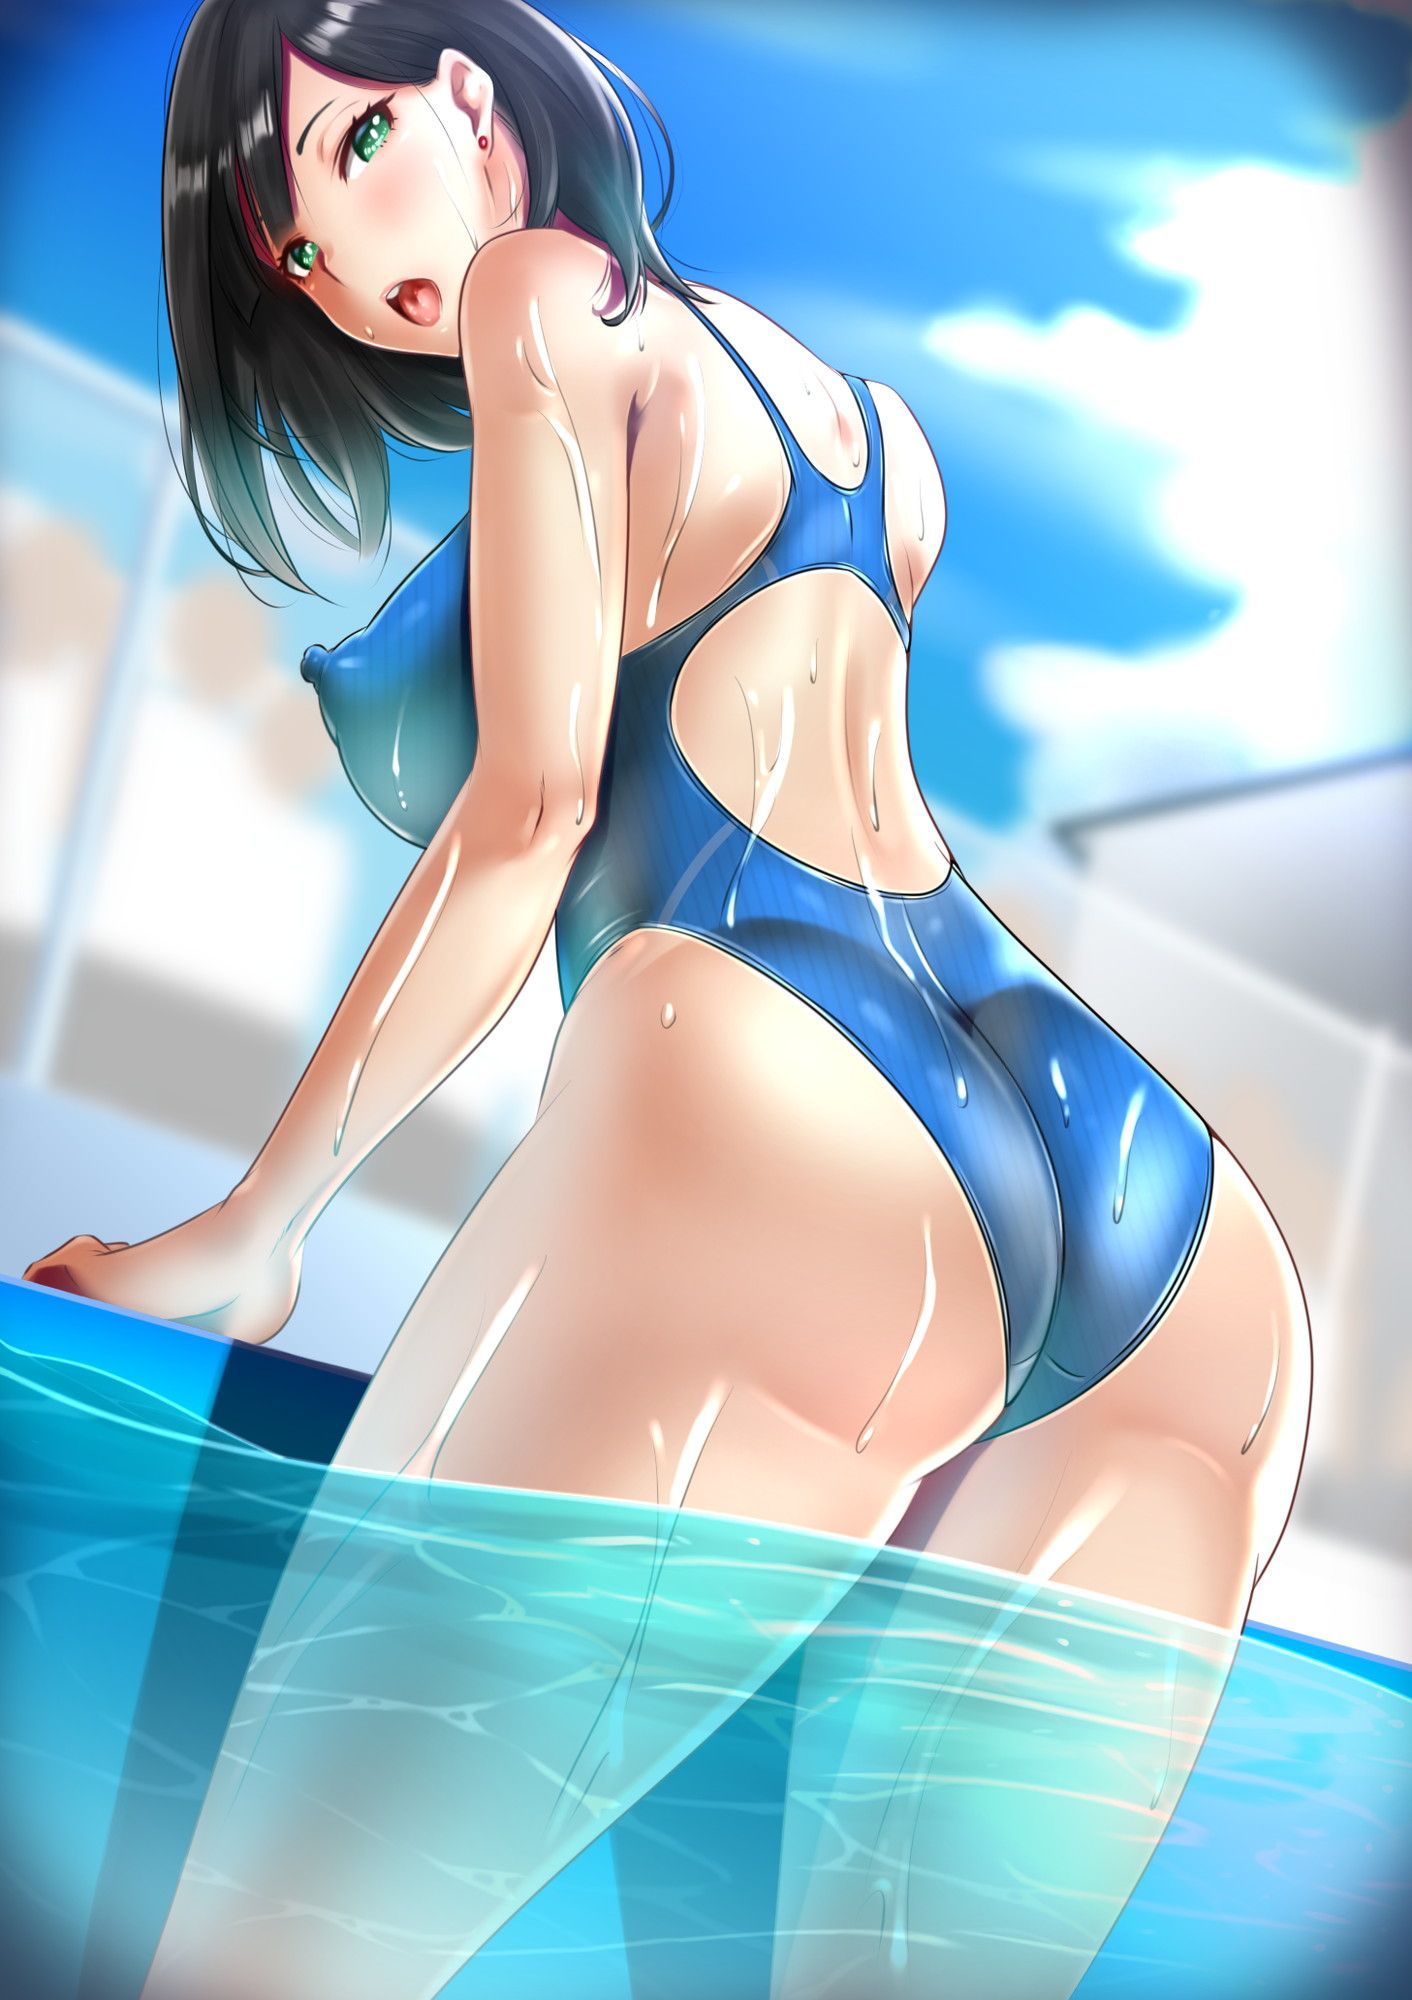 Swimming suit is erotic, isn't it? 6